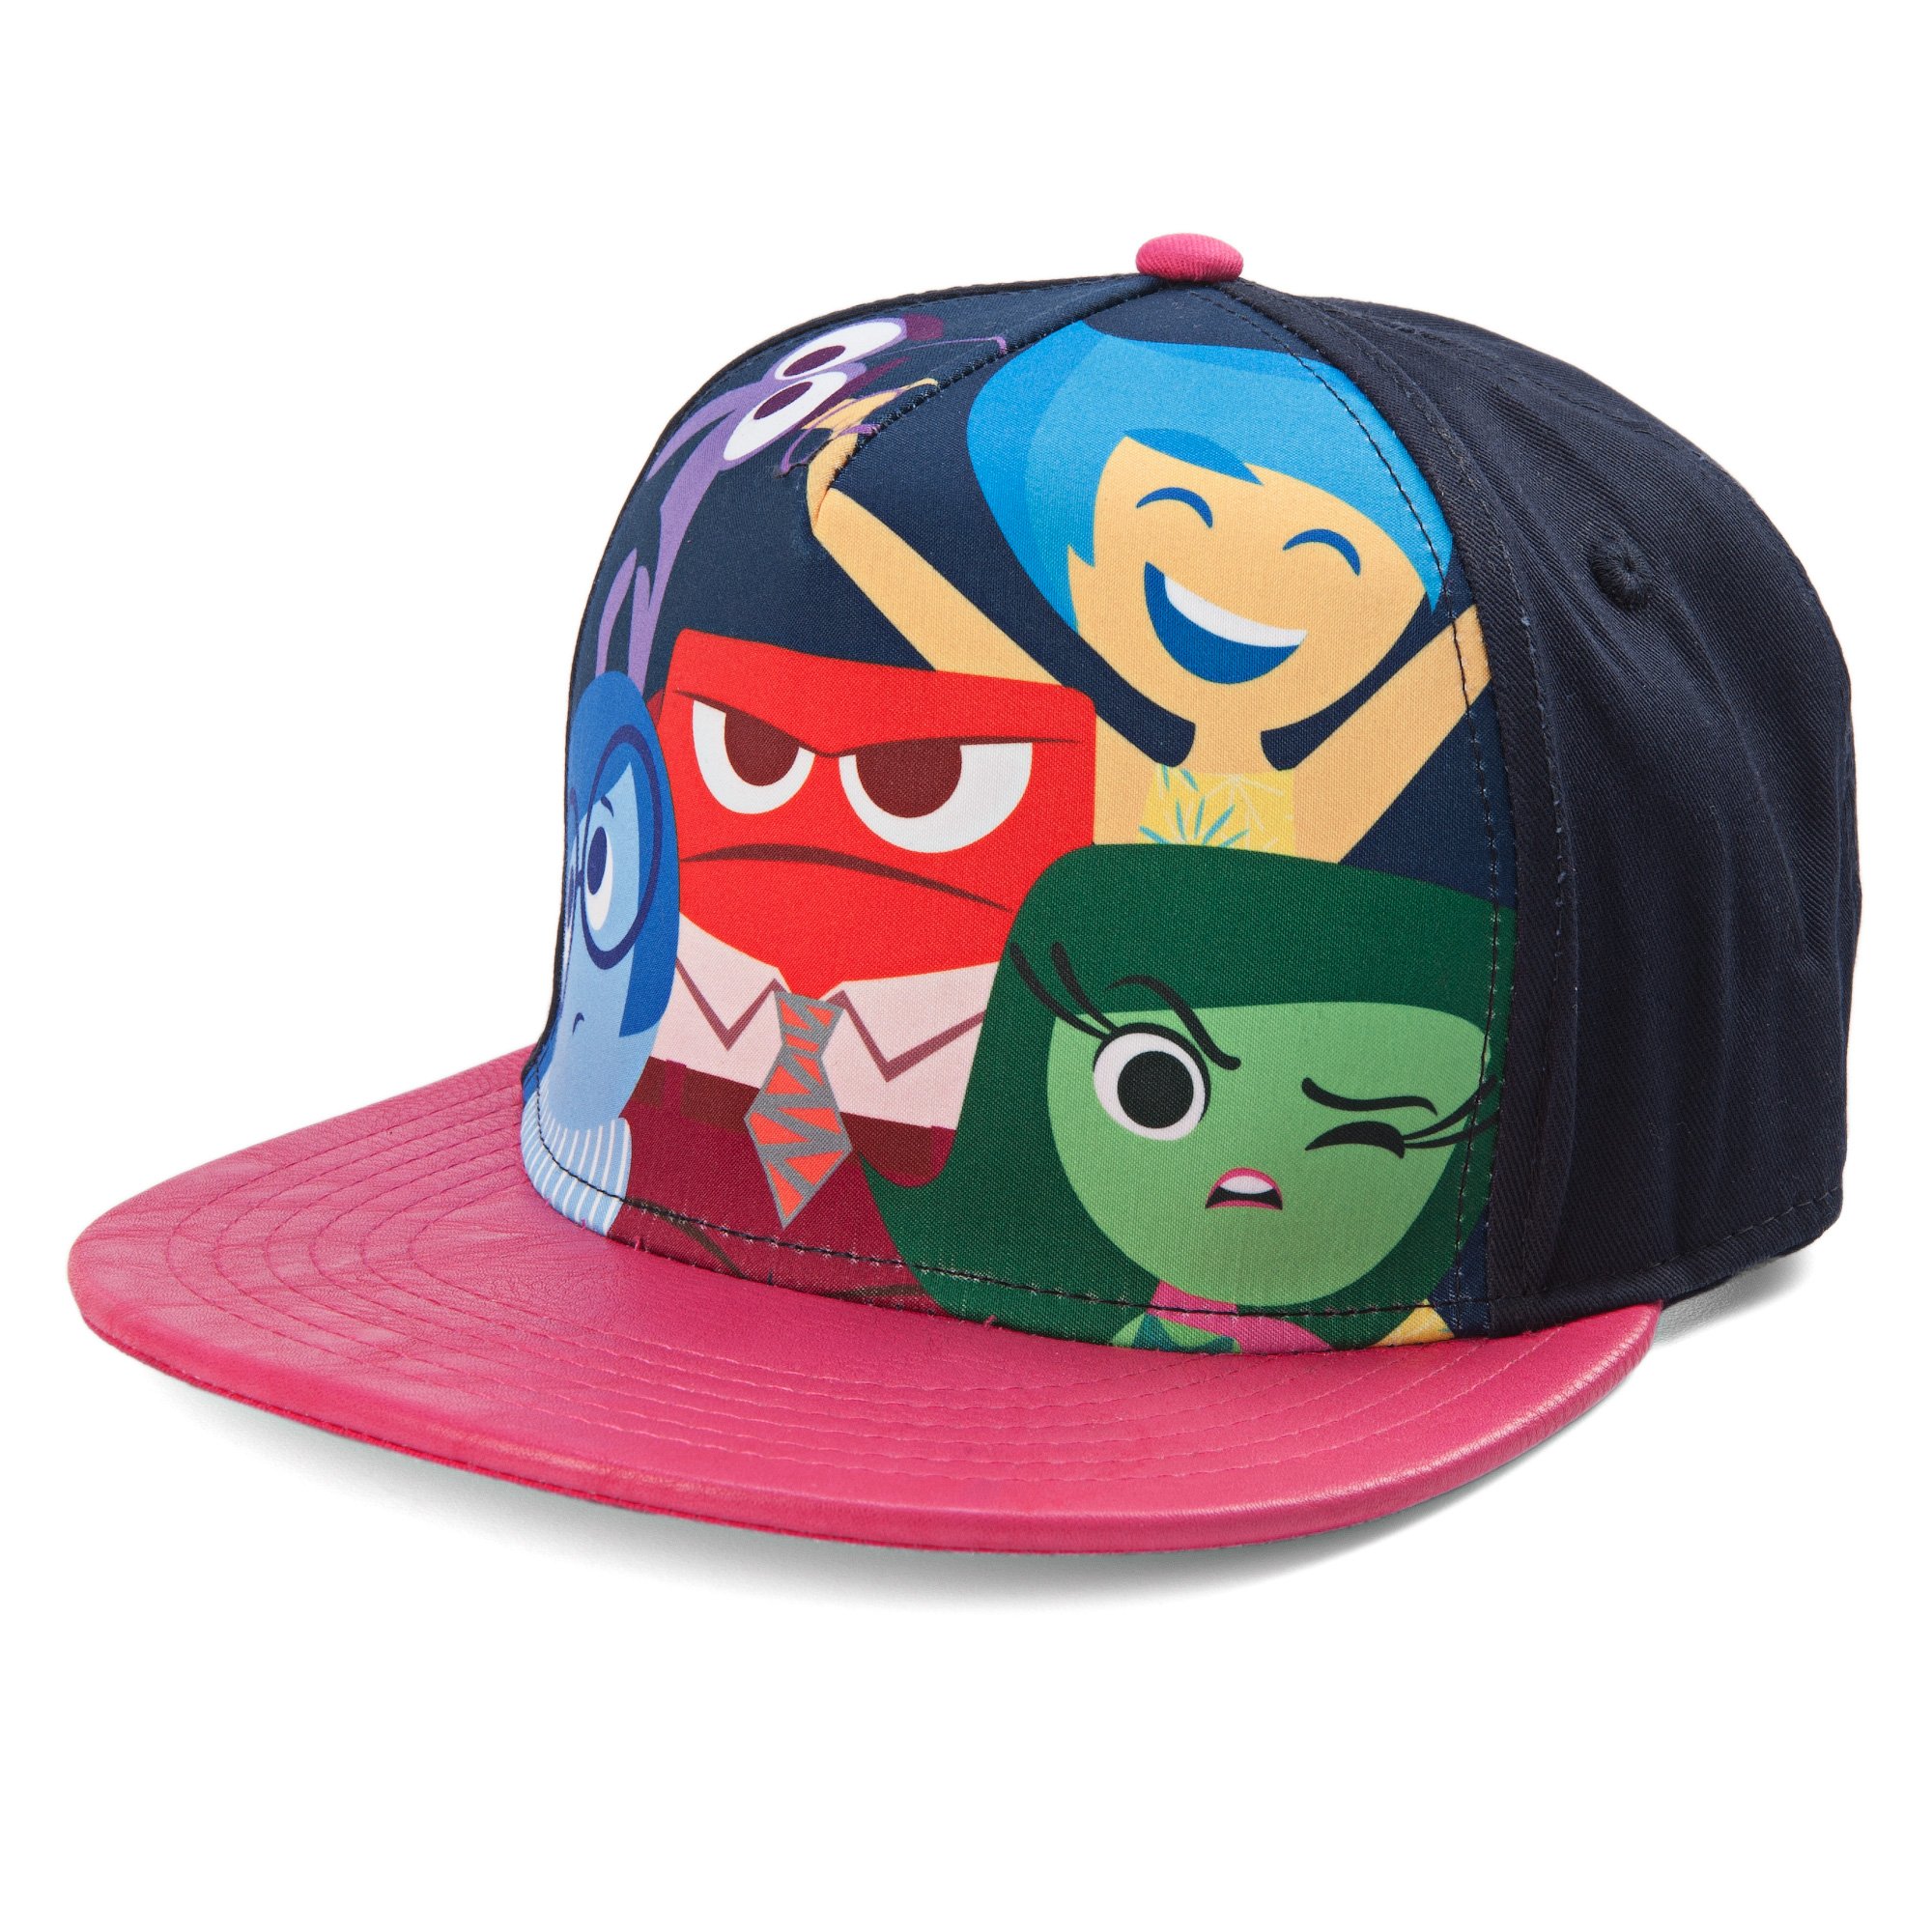 Inside Out Children's Character Baseball Cap Hat